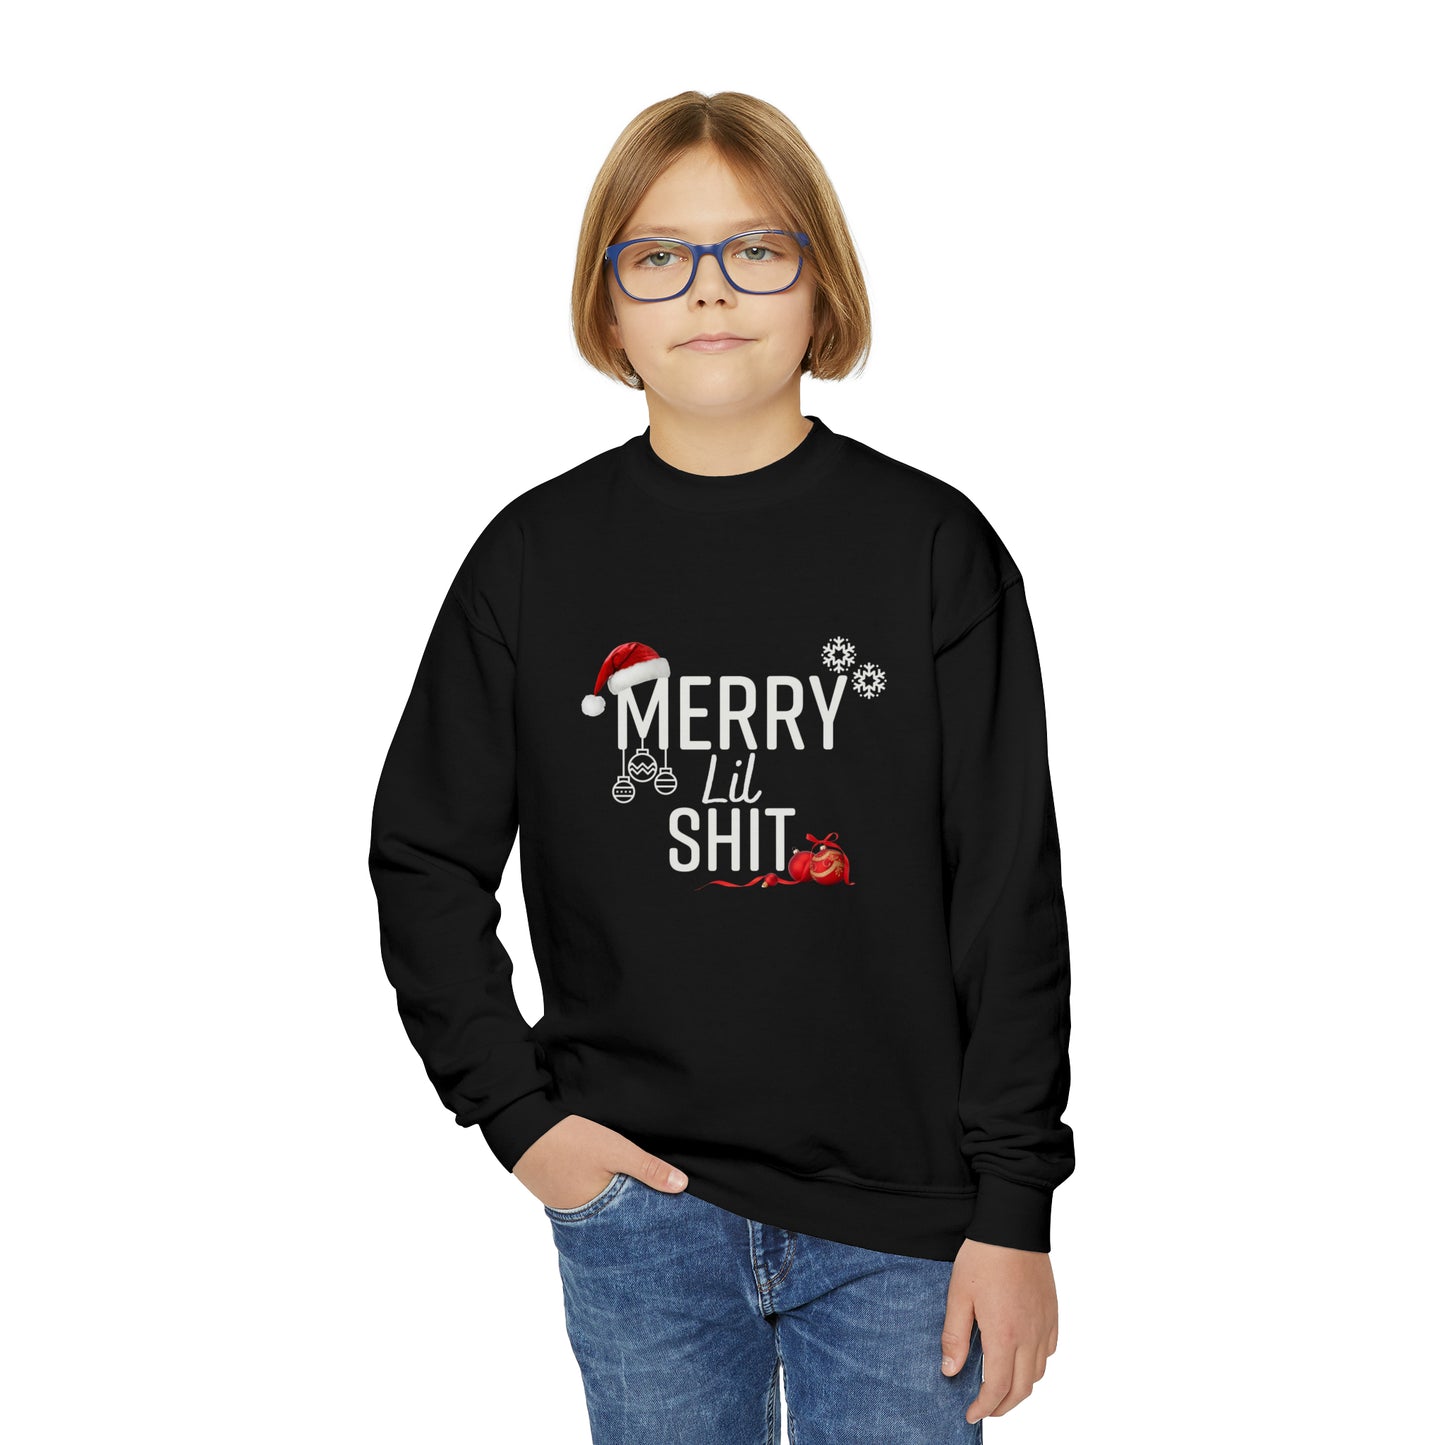 Youth Crewneck Sweatshirt, Holiday Sweatshirt, Merry lil, Kids Loose Fitting Long Sleeve